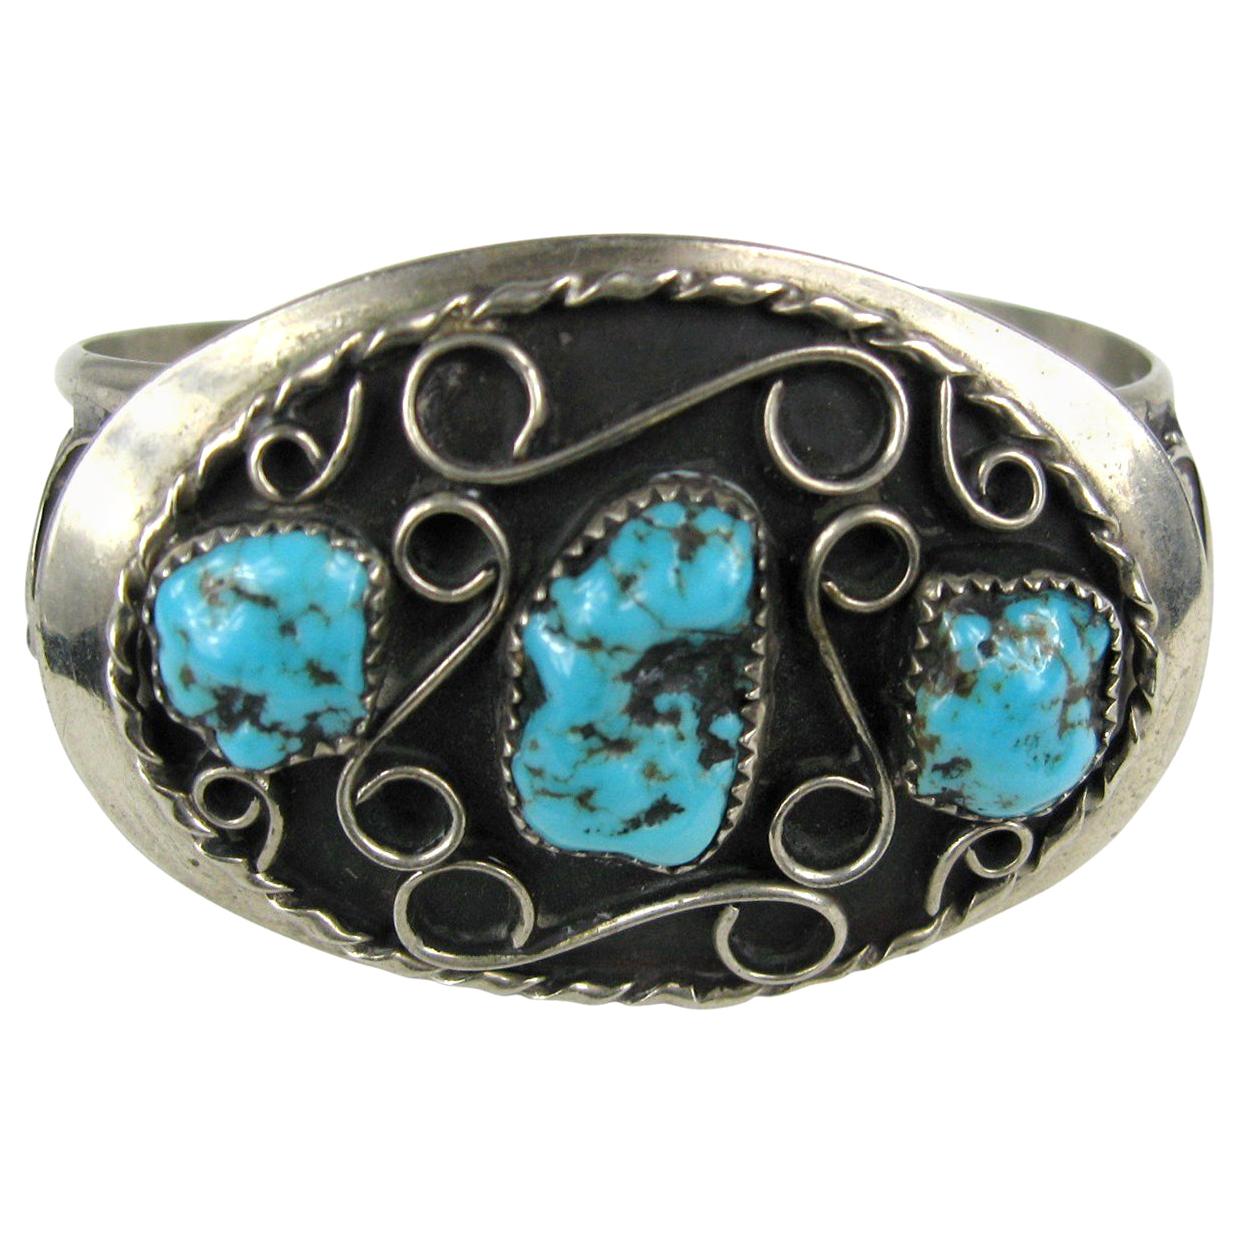 Turquoise Bracelet Old Pawn Indian Bracelet Vintage Native American Old Pawn Sterling Silver Turquoise Cuff Bracelet Navajo